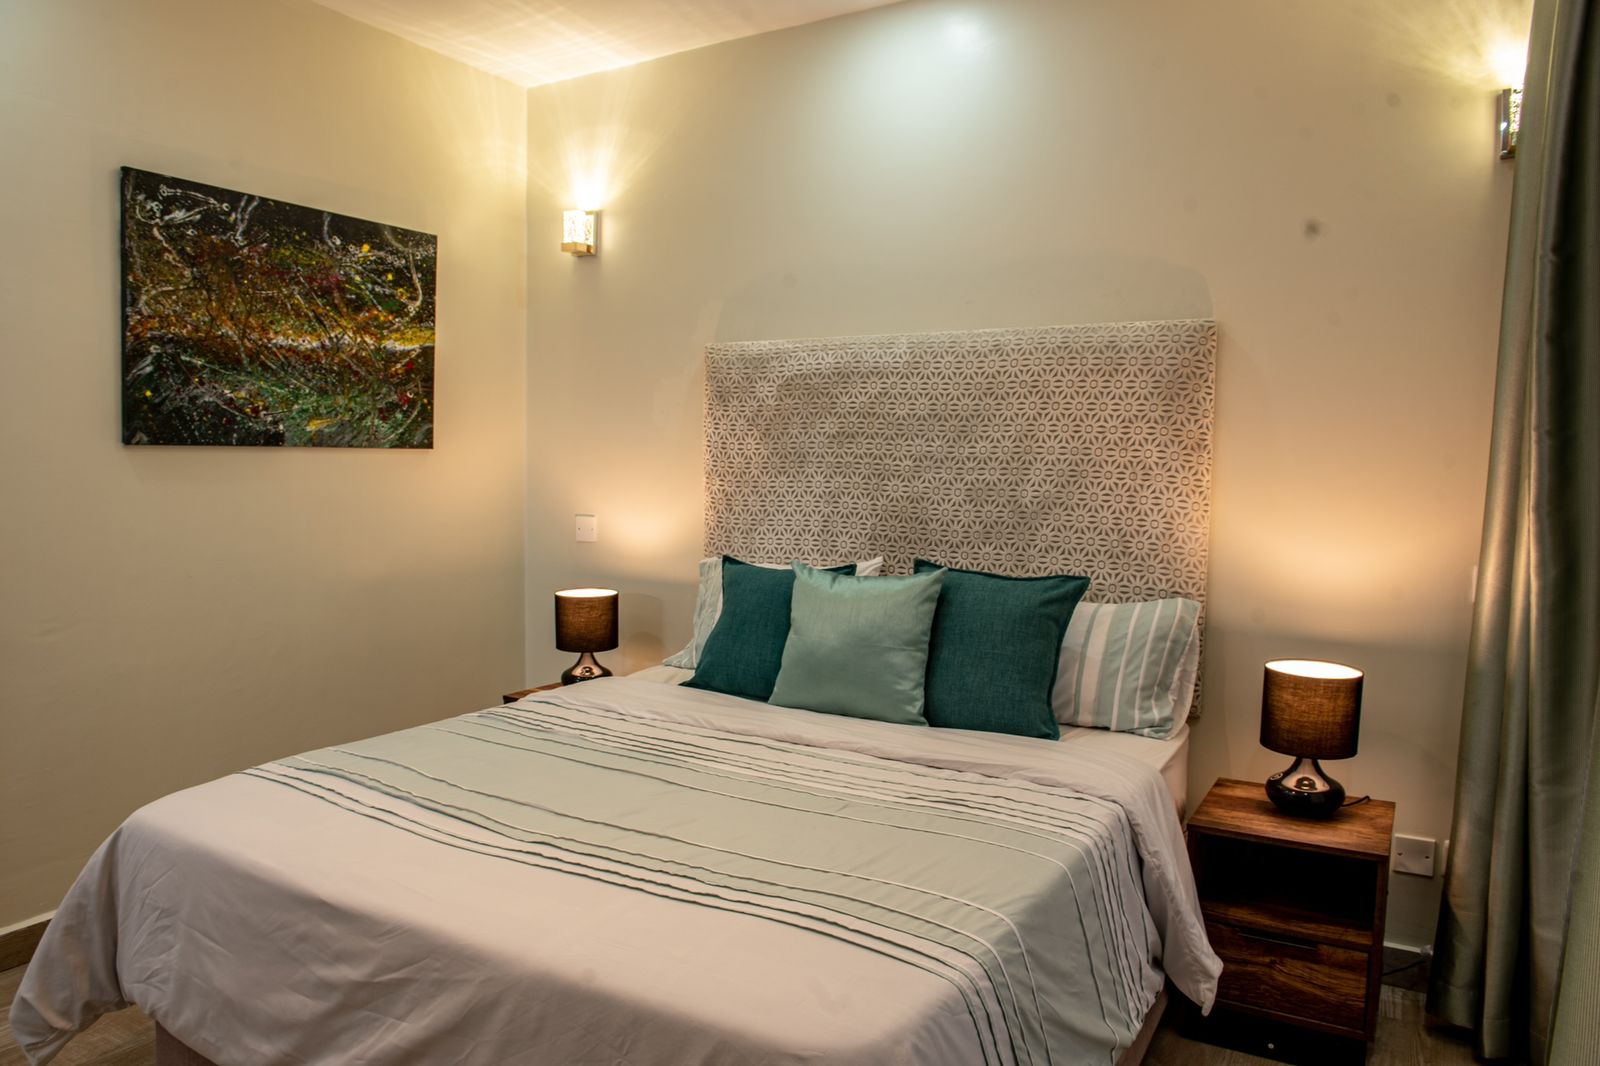 An Elegant Fully Furnished 2 Bedroom Apartments For Rent In Kileleshwa at Ksh180k:Month12